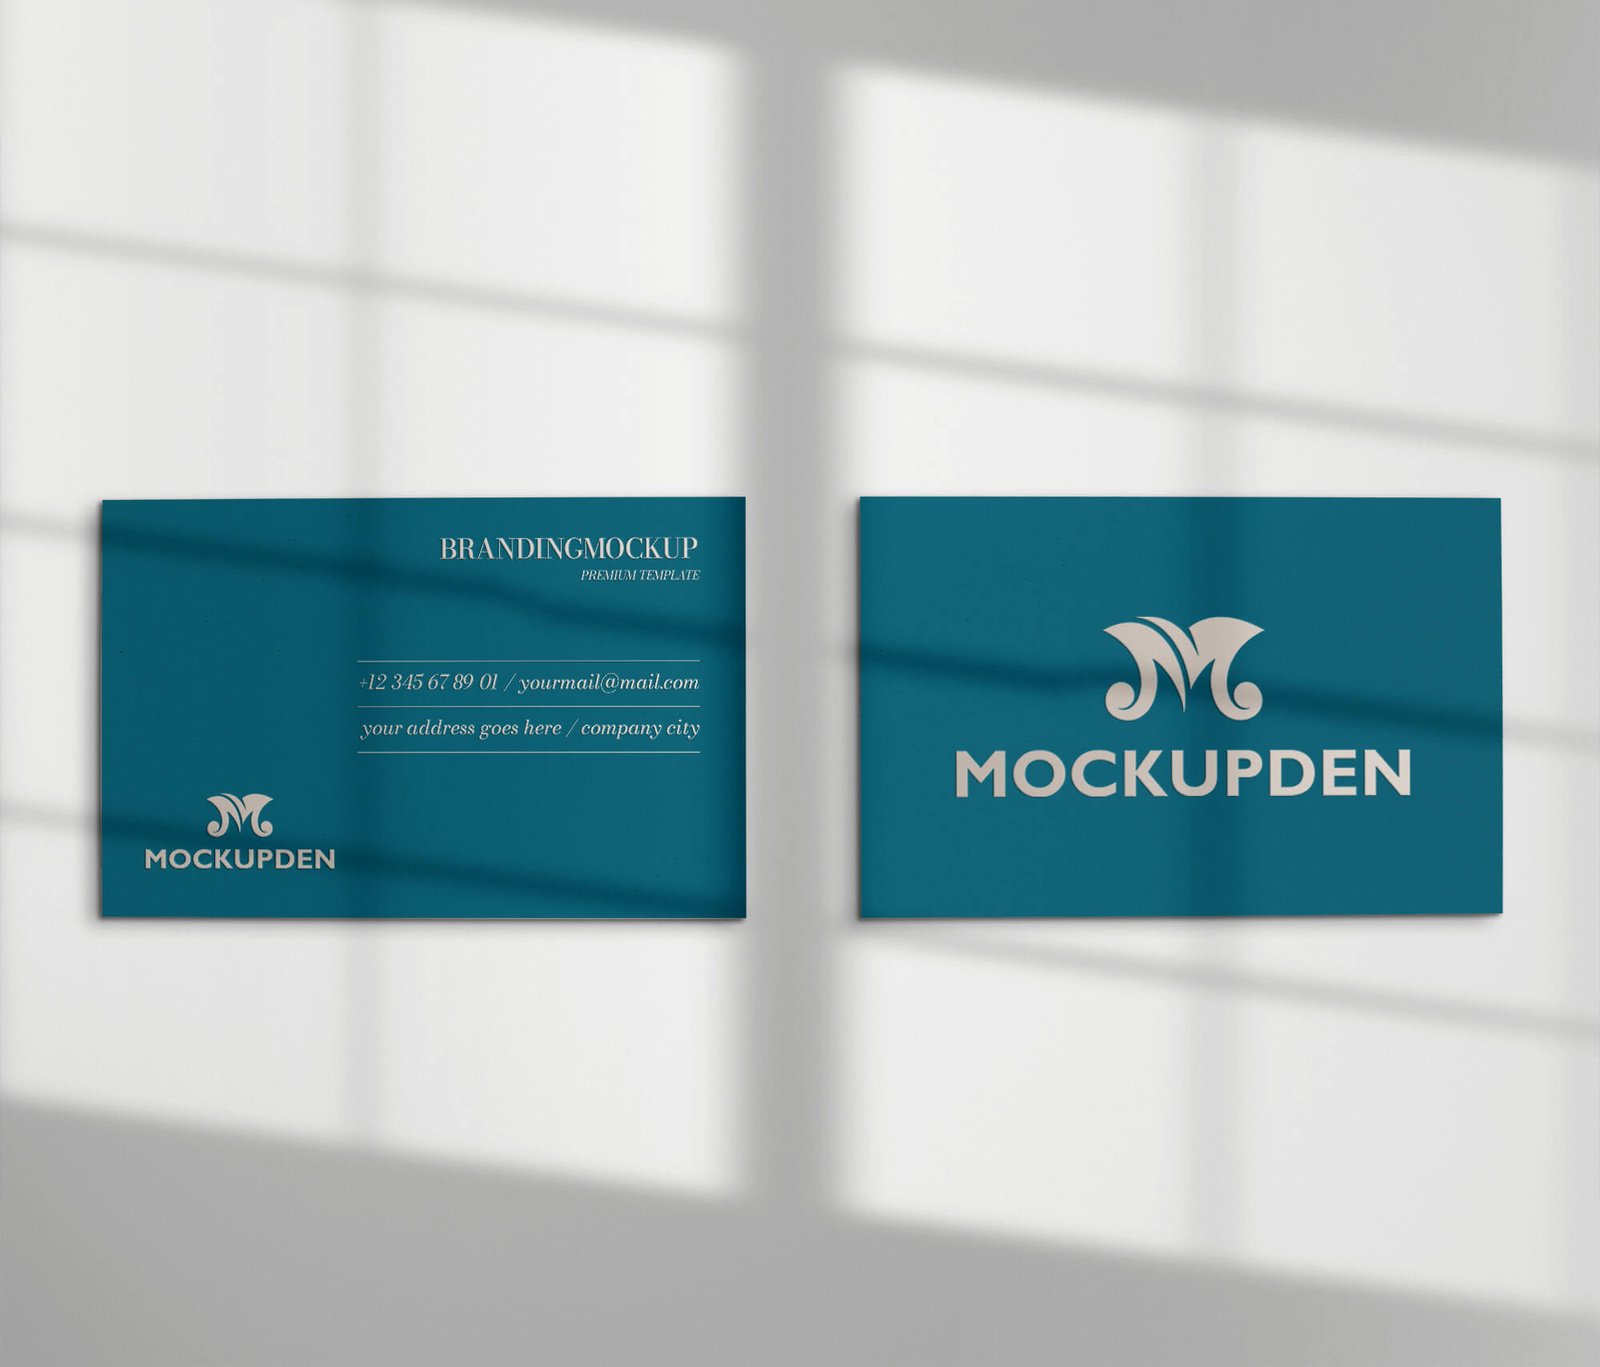 Design Free Calling Card Mockup PSD Template